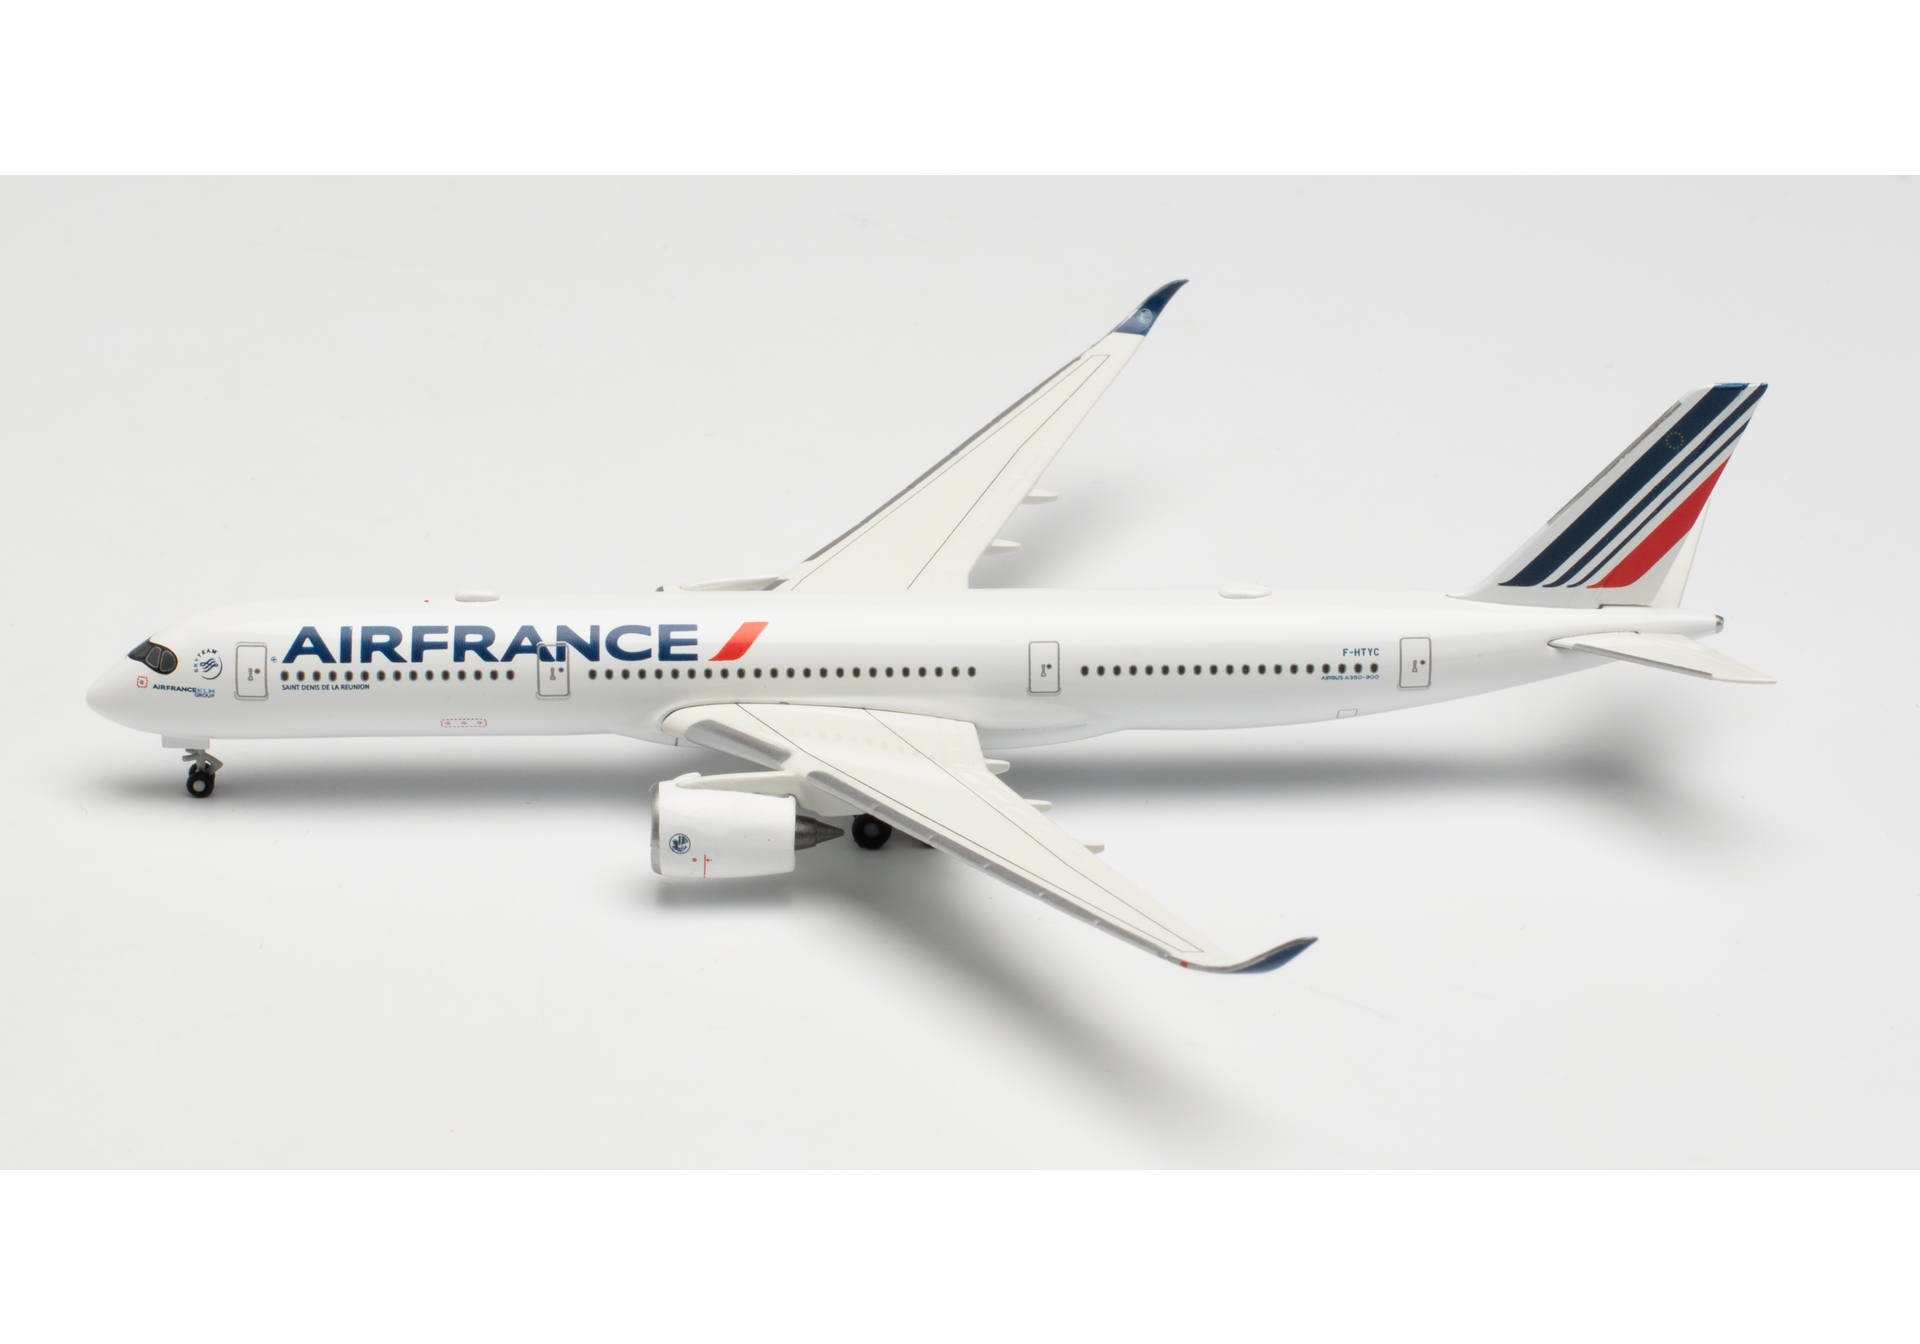   Air France Airbus A350-900  F-HTYC, 1:500, 533478-001. # 1 hobbyplus.ru